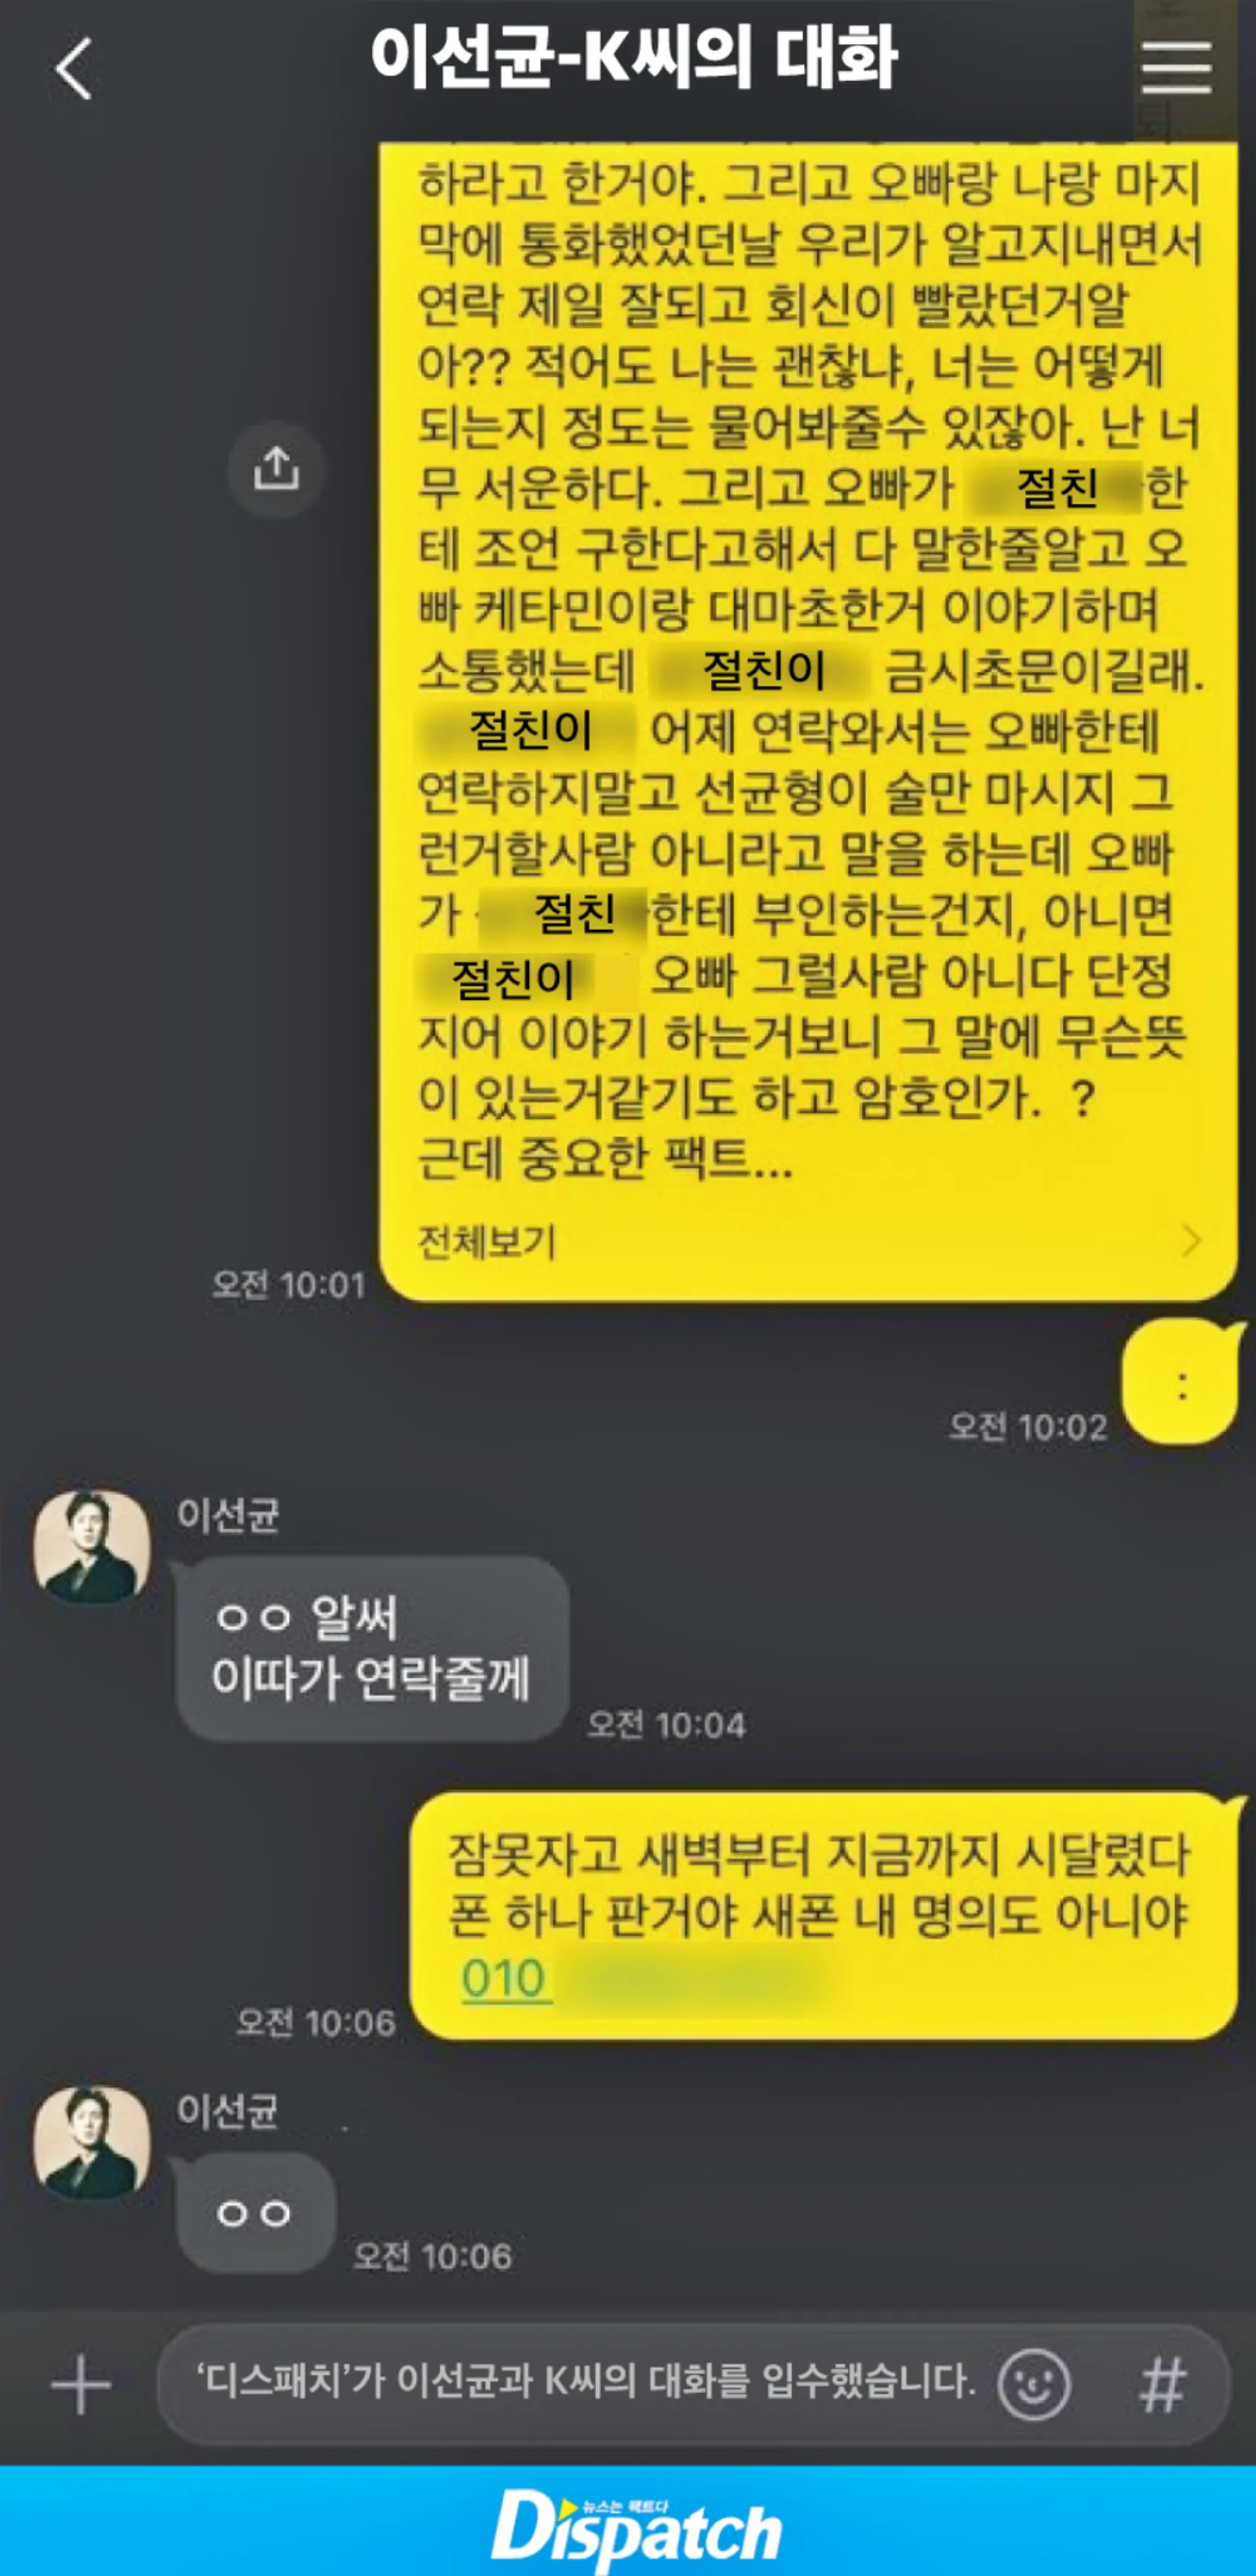 Dispatch Bongkar Kasus G-Dragon dan Lee Sun Kyun, Siapa Madam K?